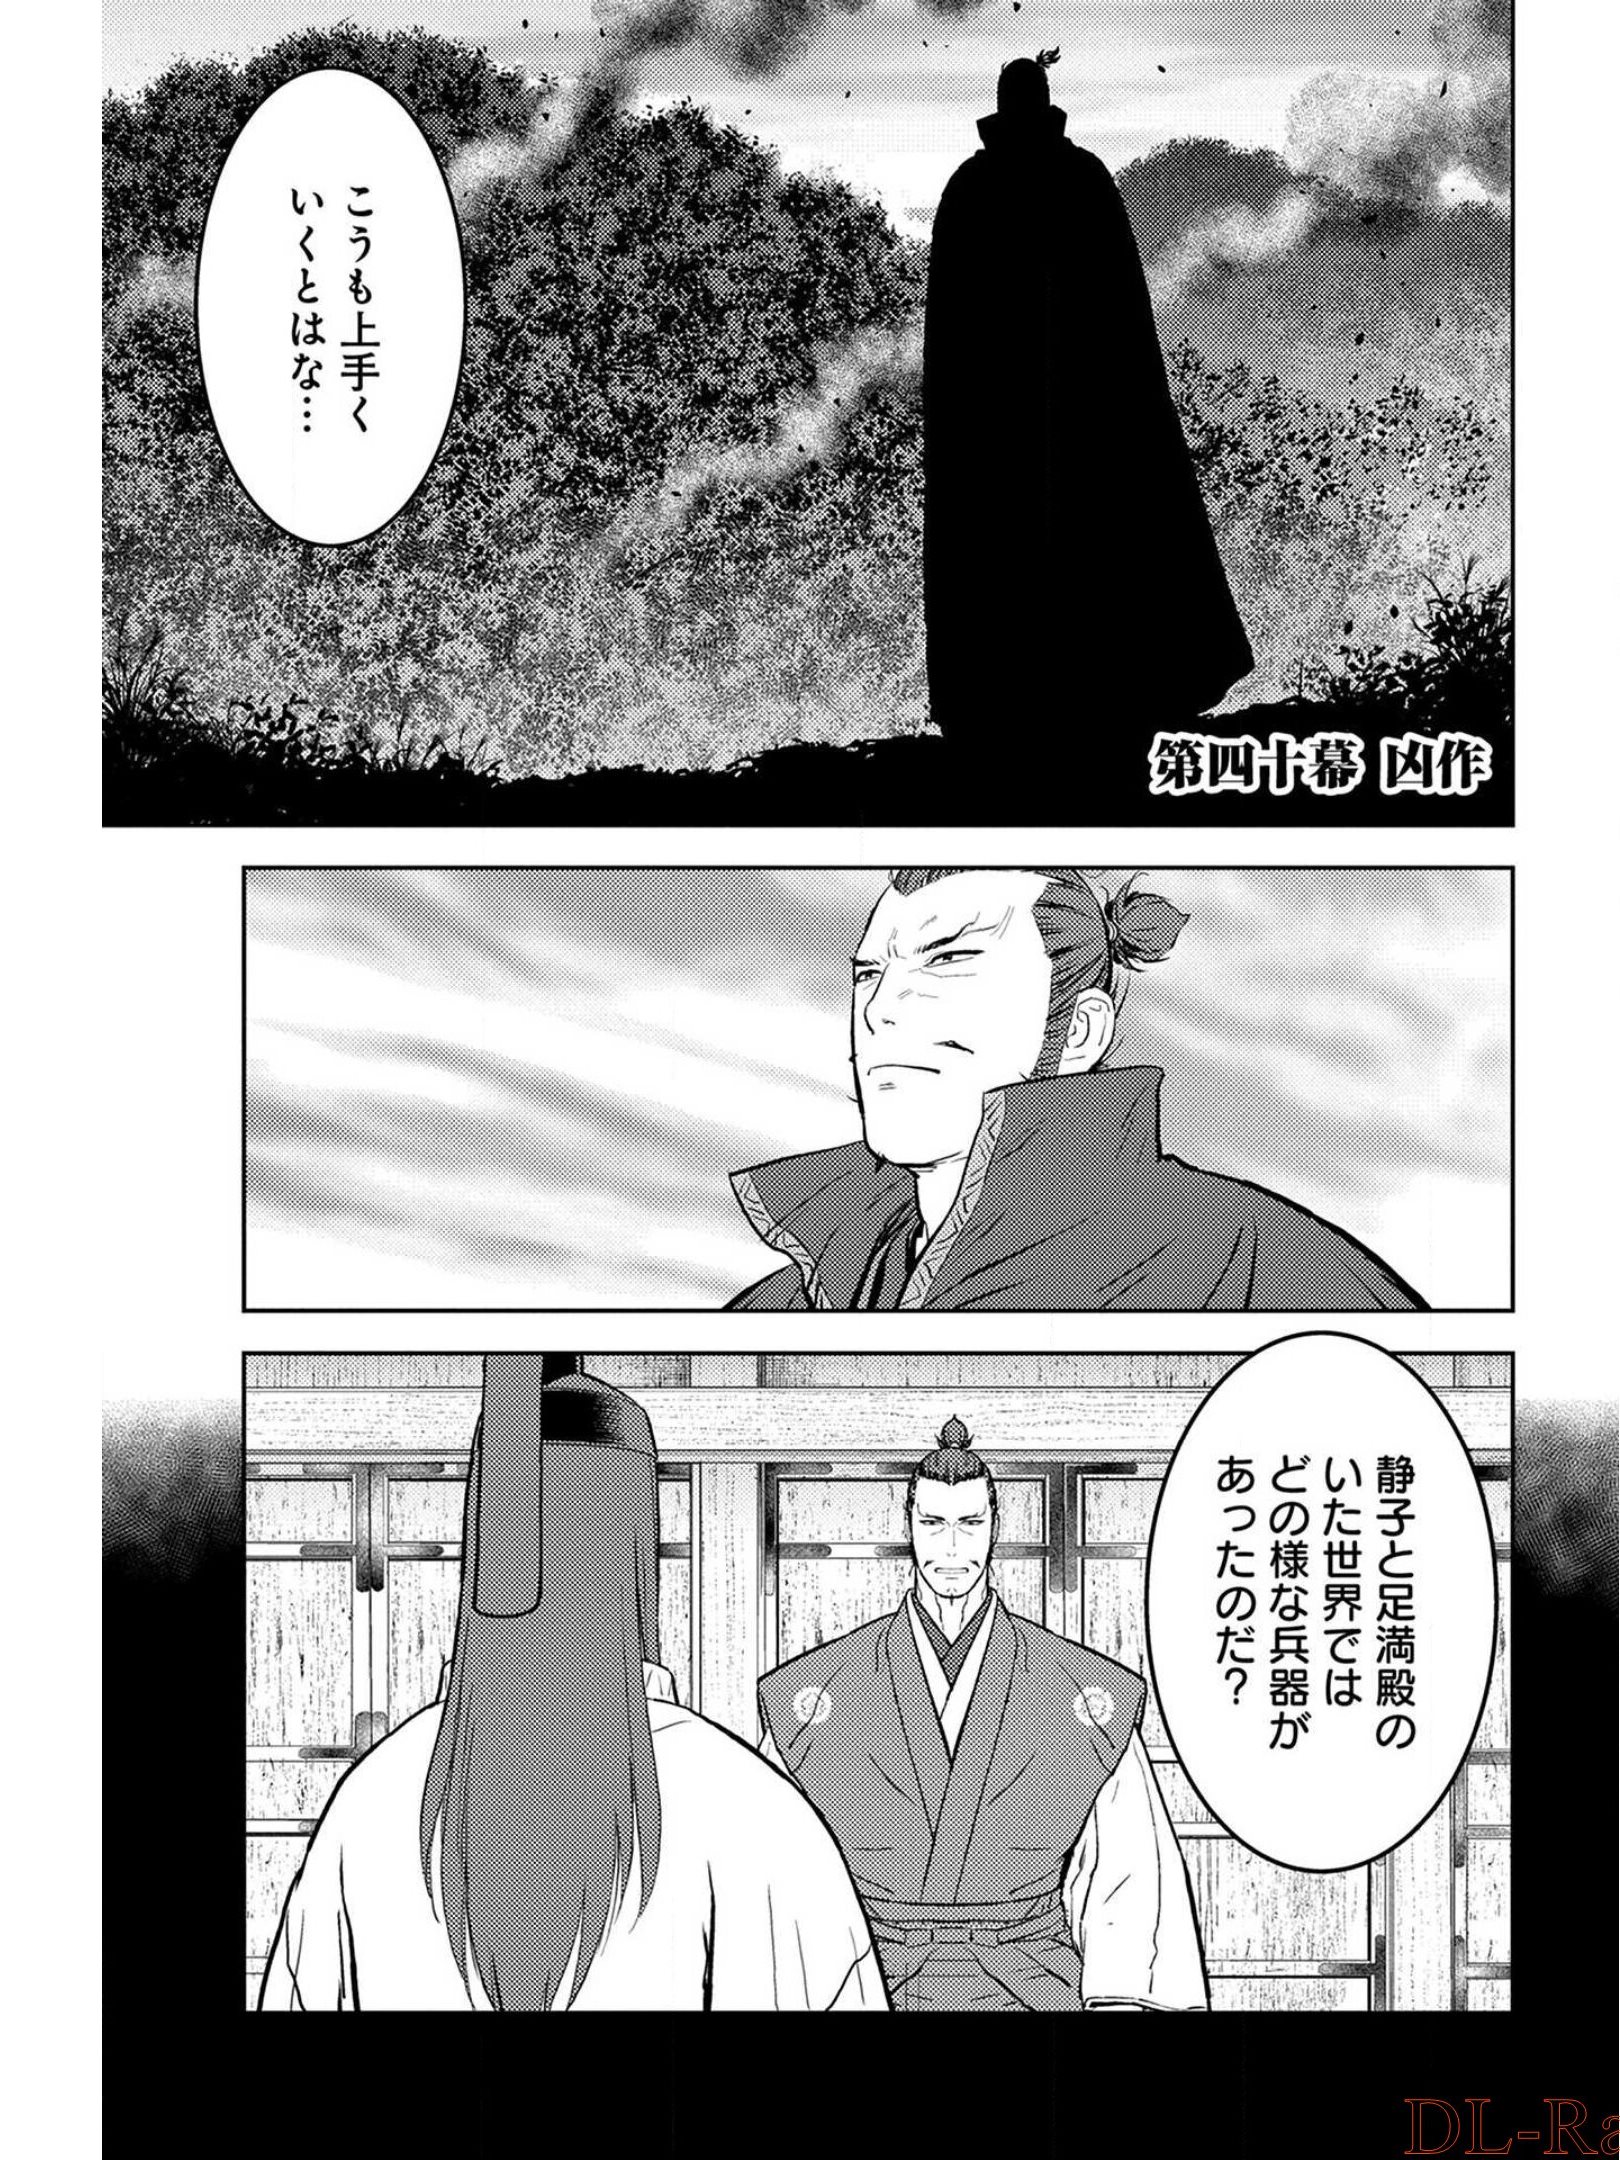 Sengoku Komachi Kuroutan - Chapter 40 - Page 1